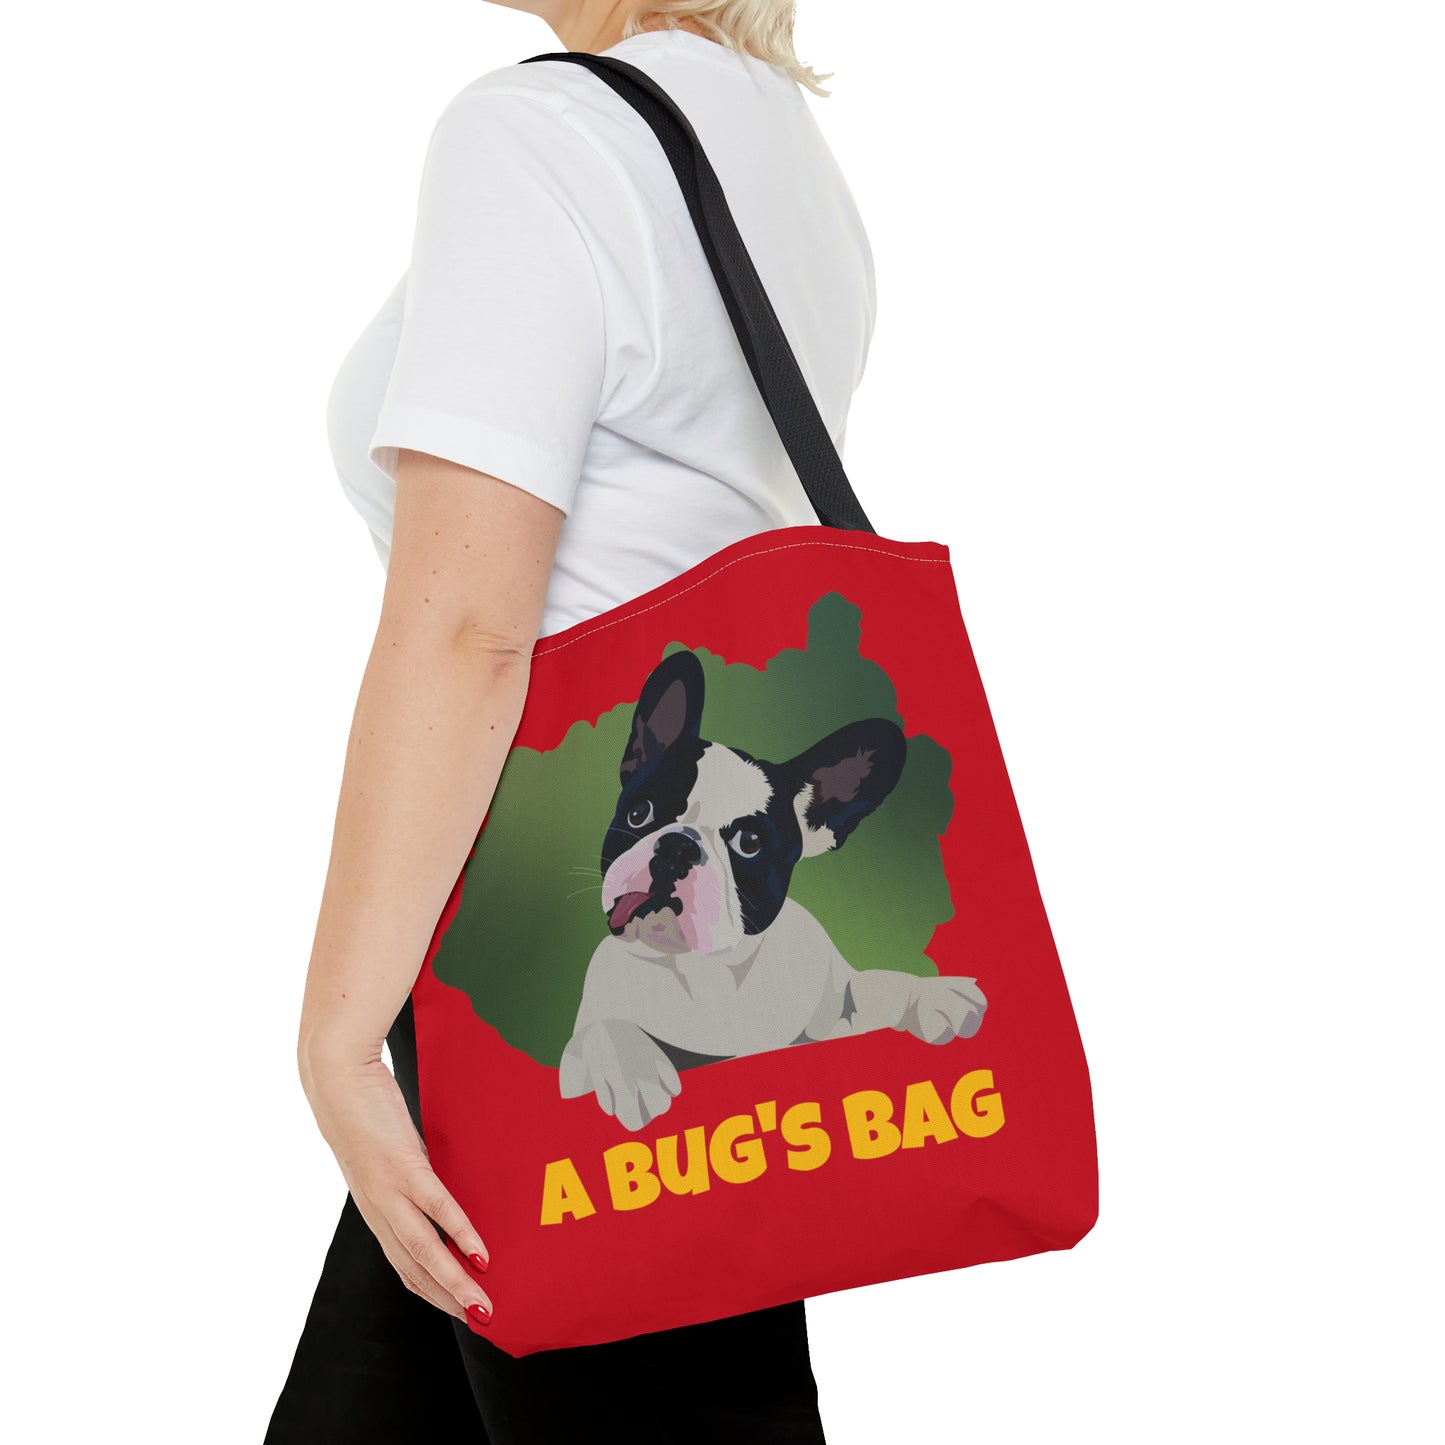 A Bug's Bag